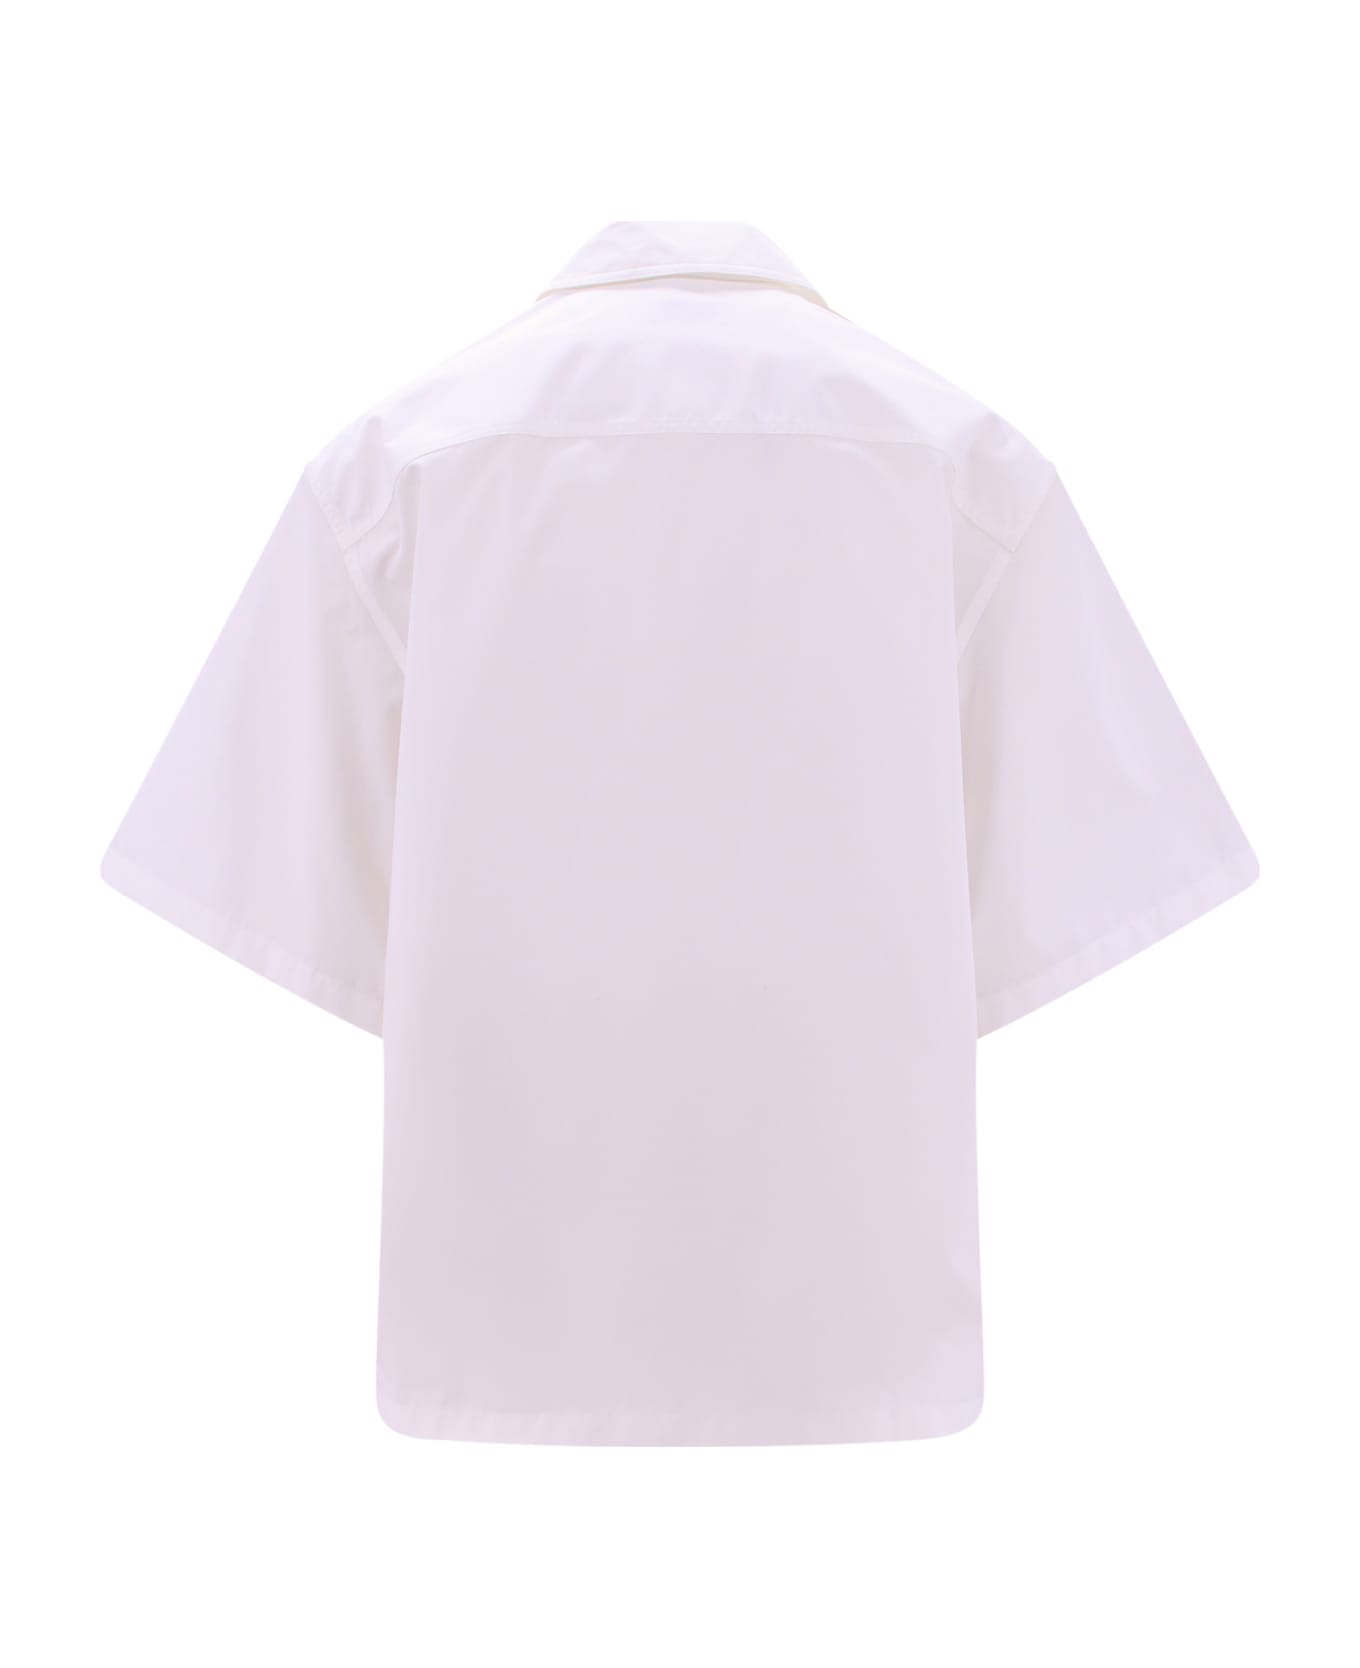 Off-White Oversize Shirt - White